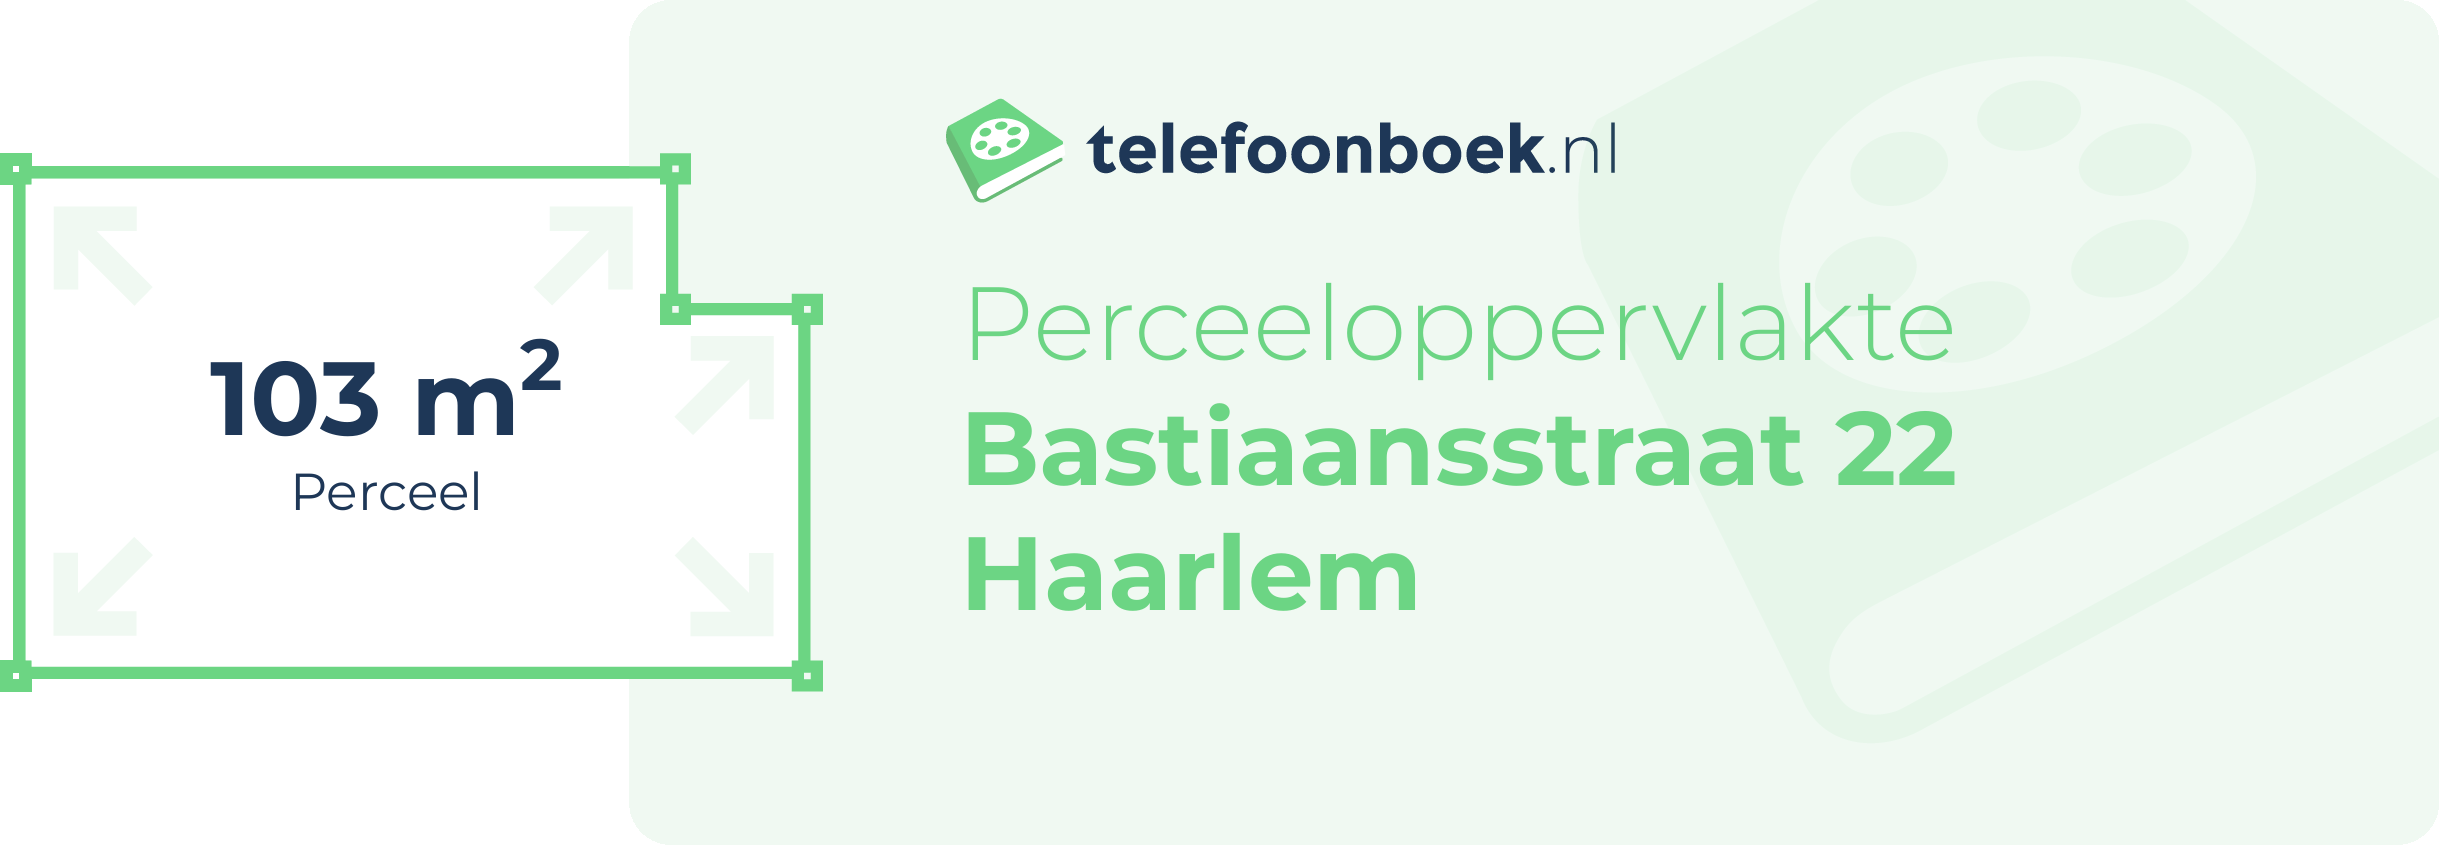 Perceeloppervlakte Bastiaansstraat 22 Haarlem